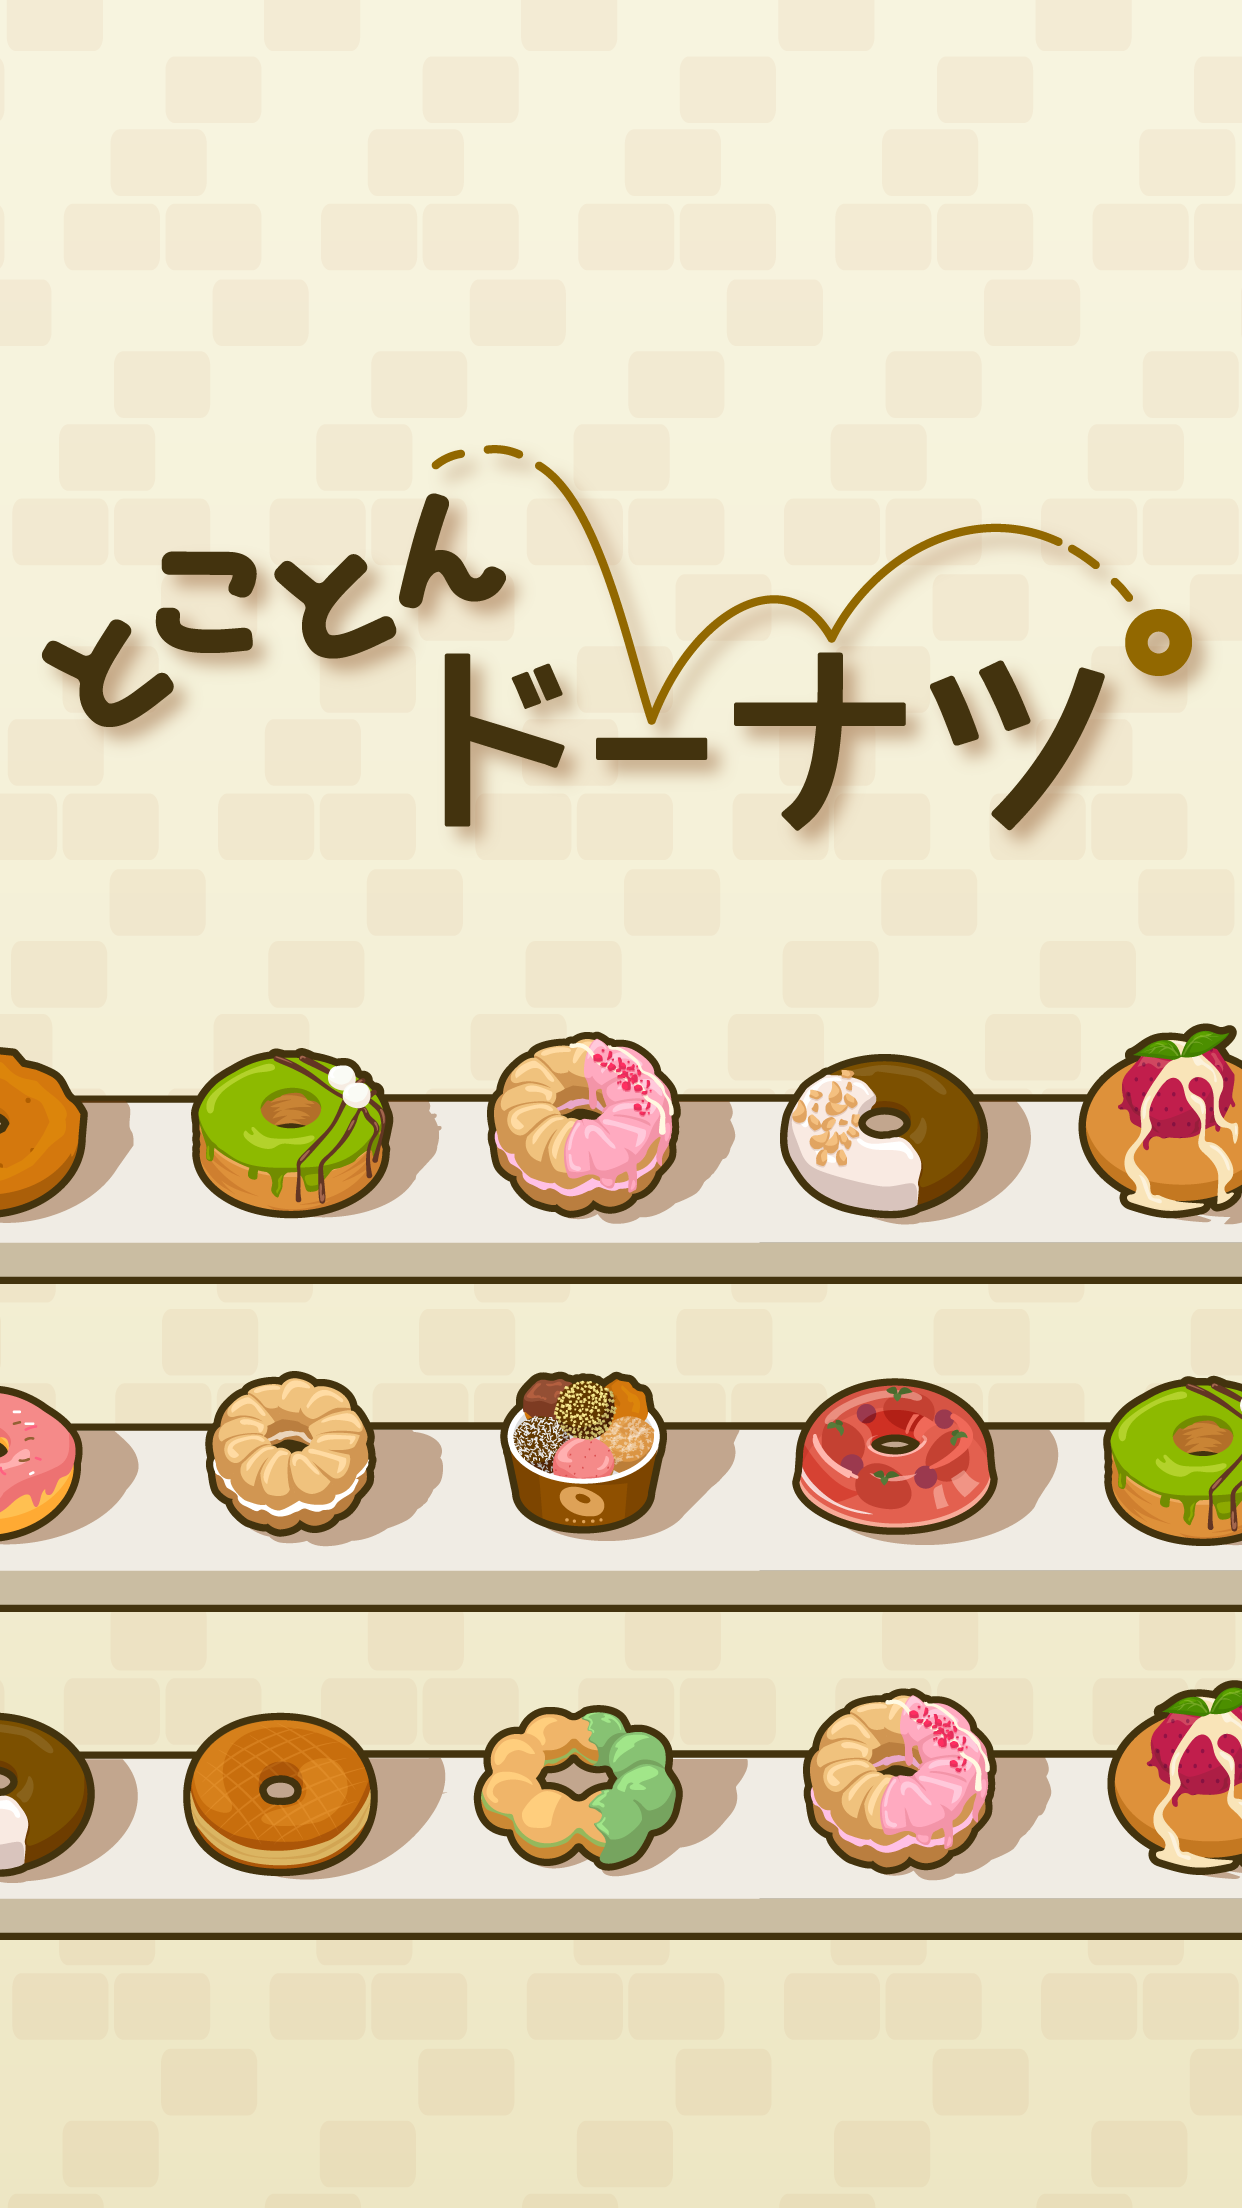 Screenshot 1 of စေ့စေ့စပ်စပ် Donuts - လျစ်လျူရှုခြင်းဖြင့်တိုးလာသောဂိမ်း 2.6.0